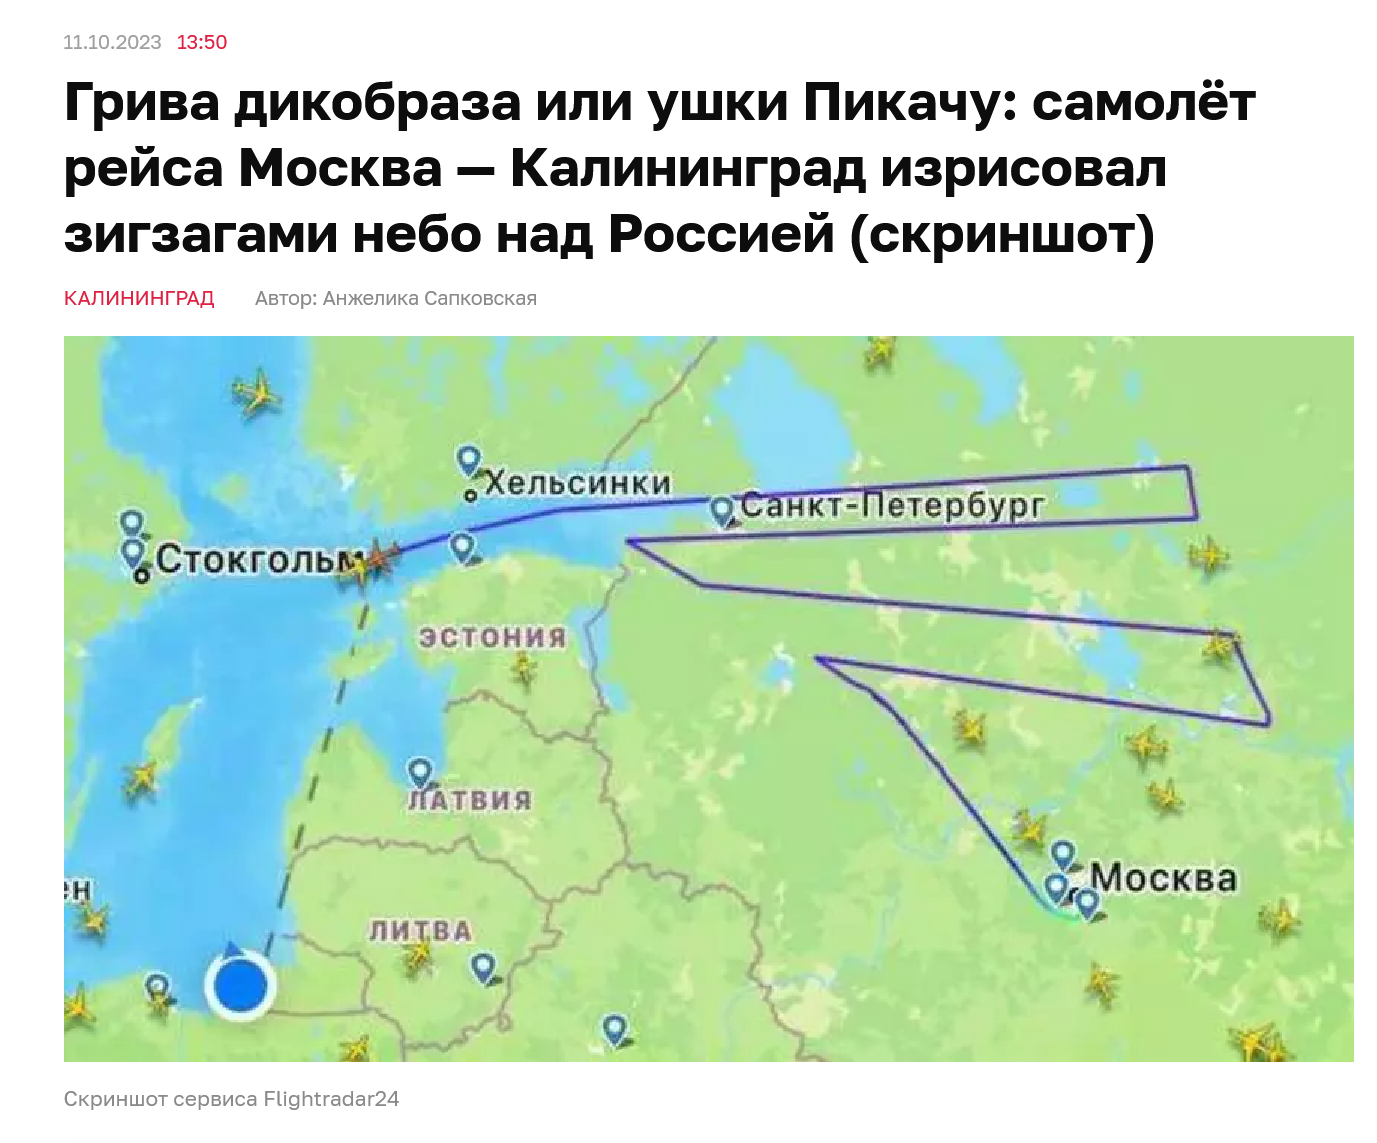 грива дикобраза или ушки Пикачу самолет рейса Москва-Калининград изрисовал зигзагами небо над Россией